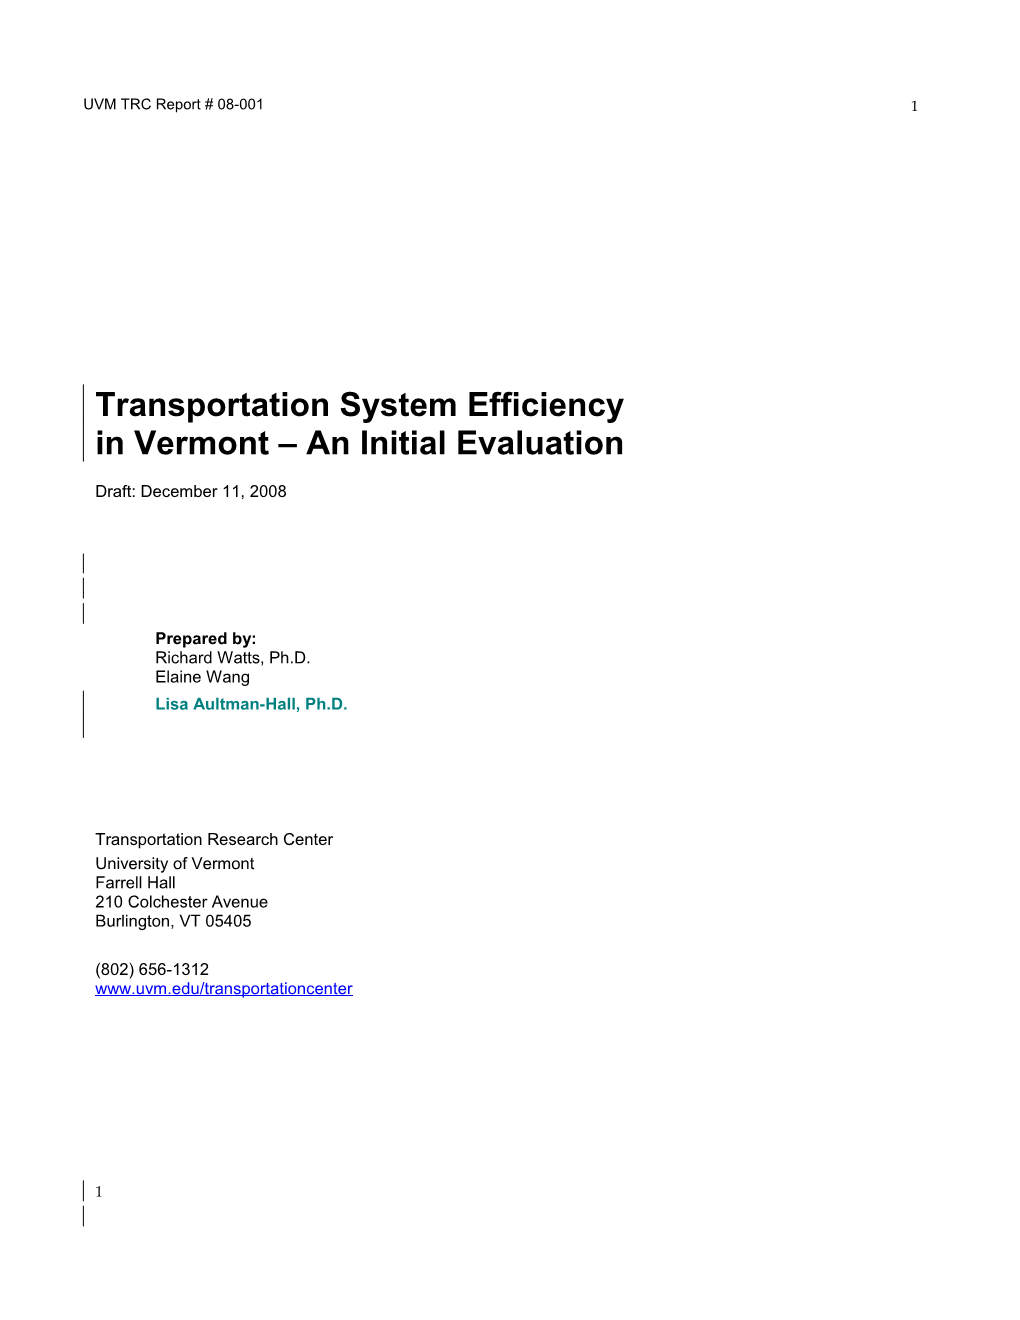 The Vermont Transportation Energy Report 2008